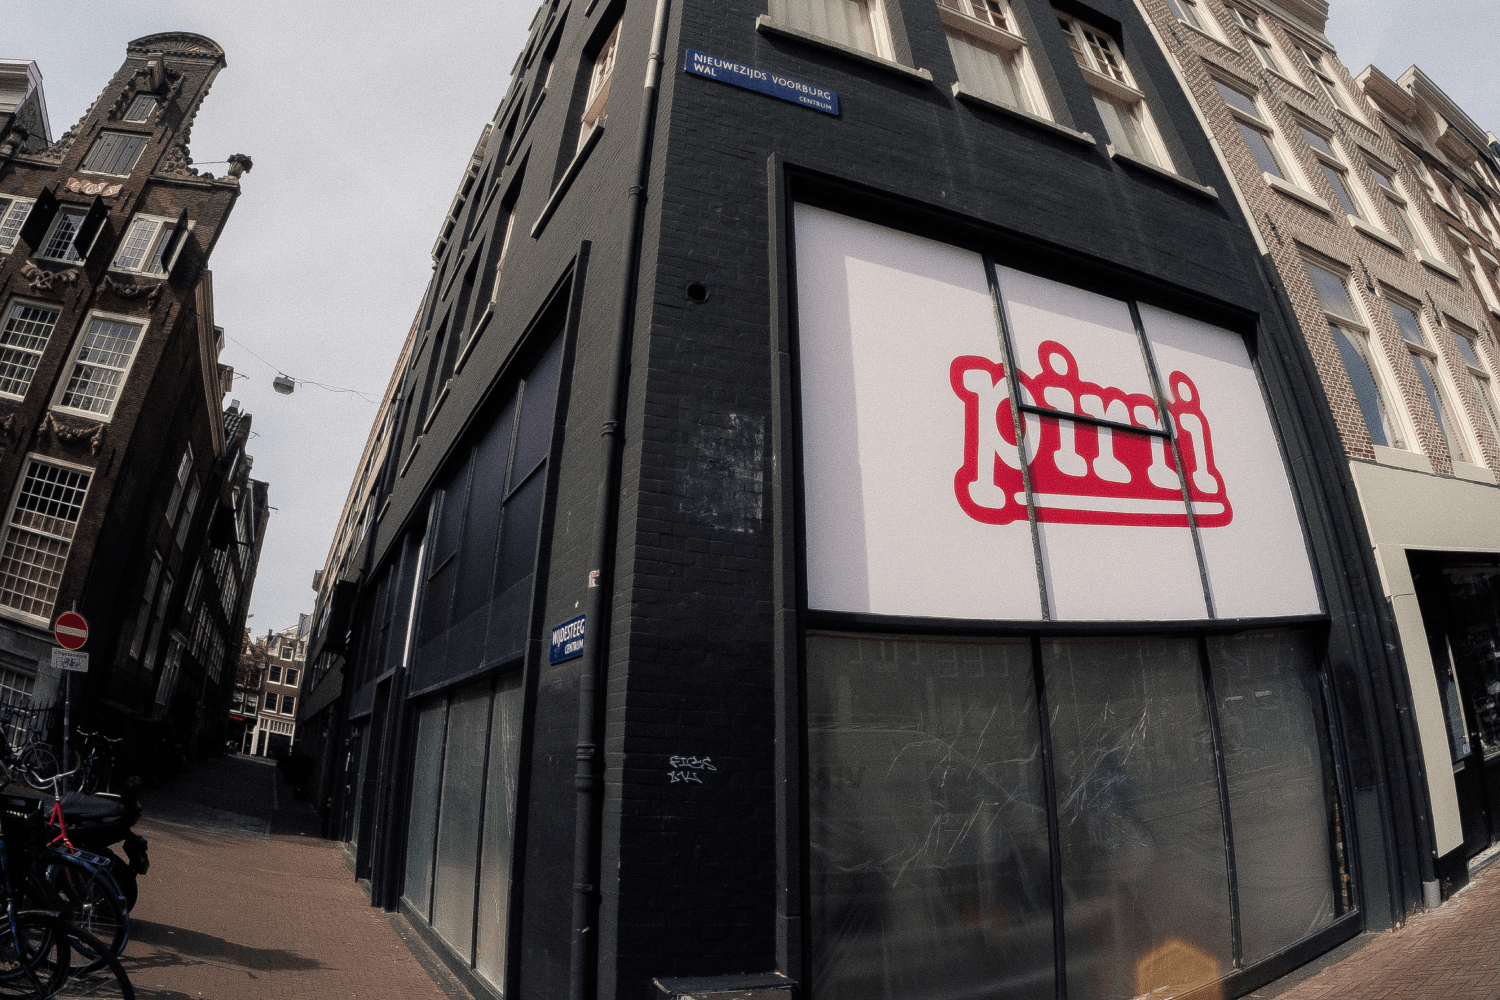 Pirri opent tweede winkel in Amsterdam na succes in Rotterdam